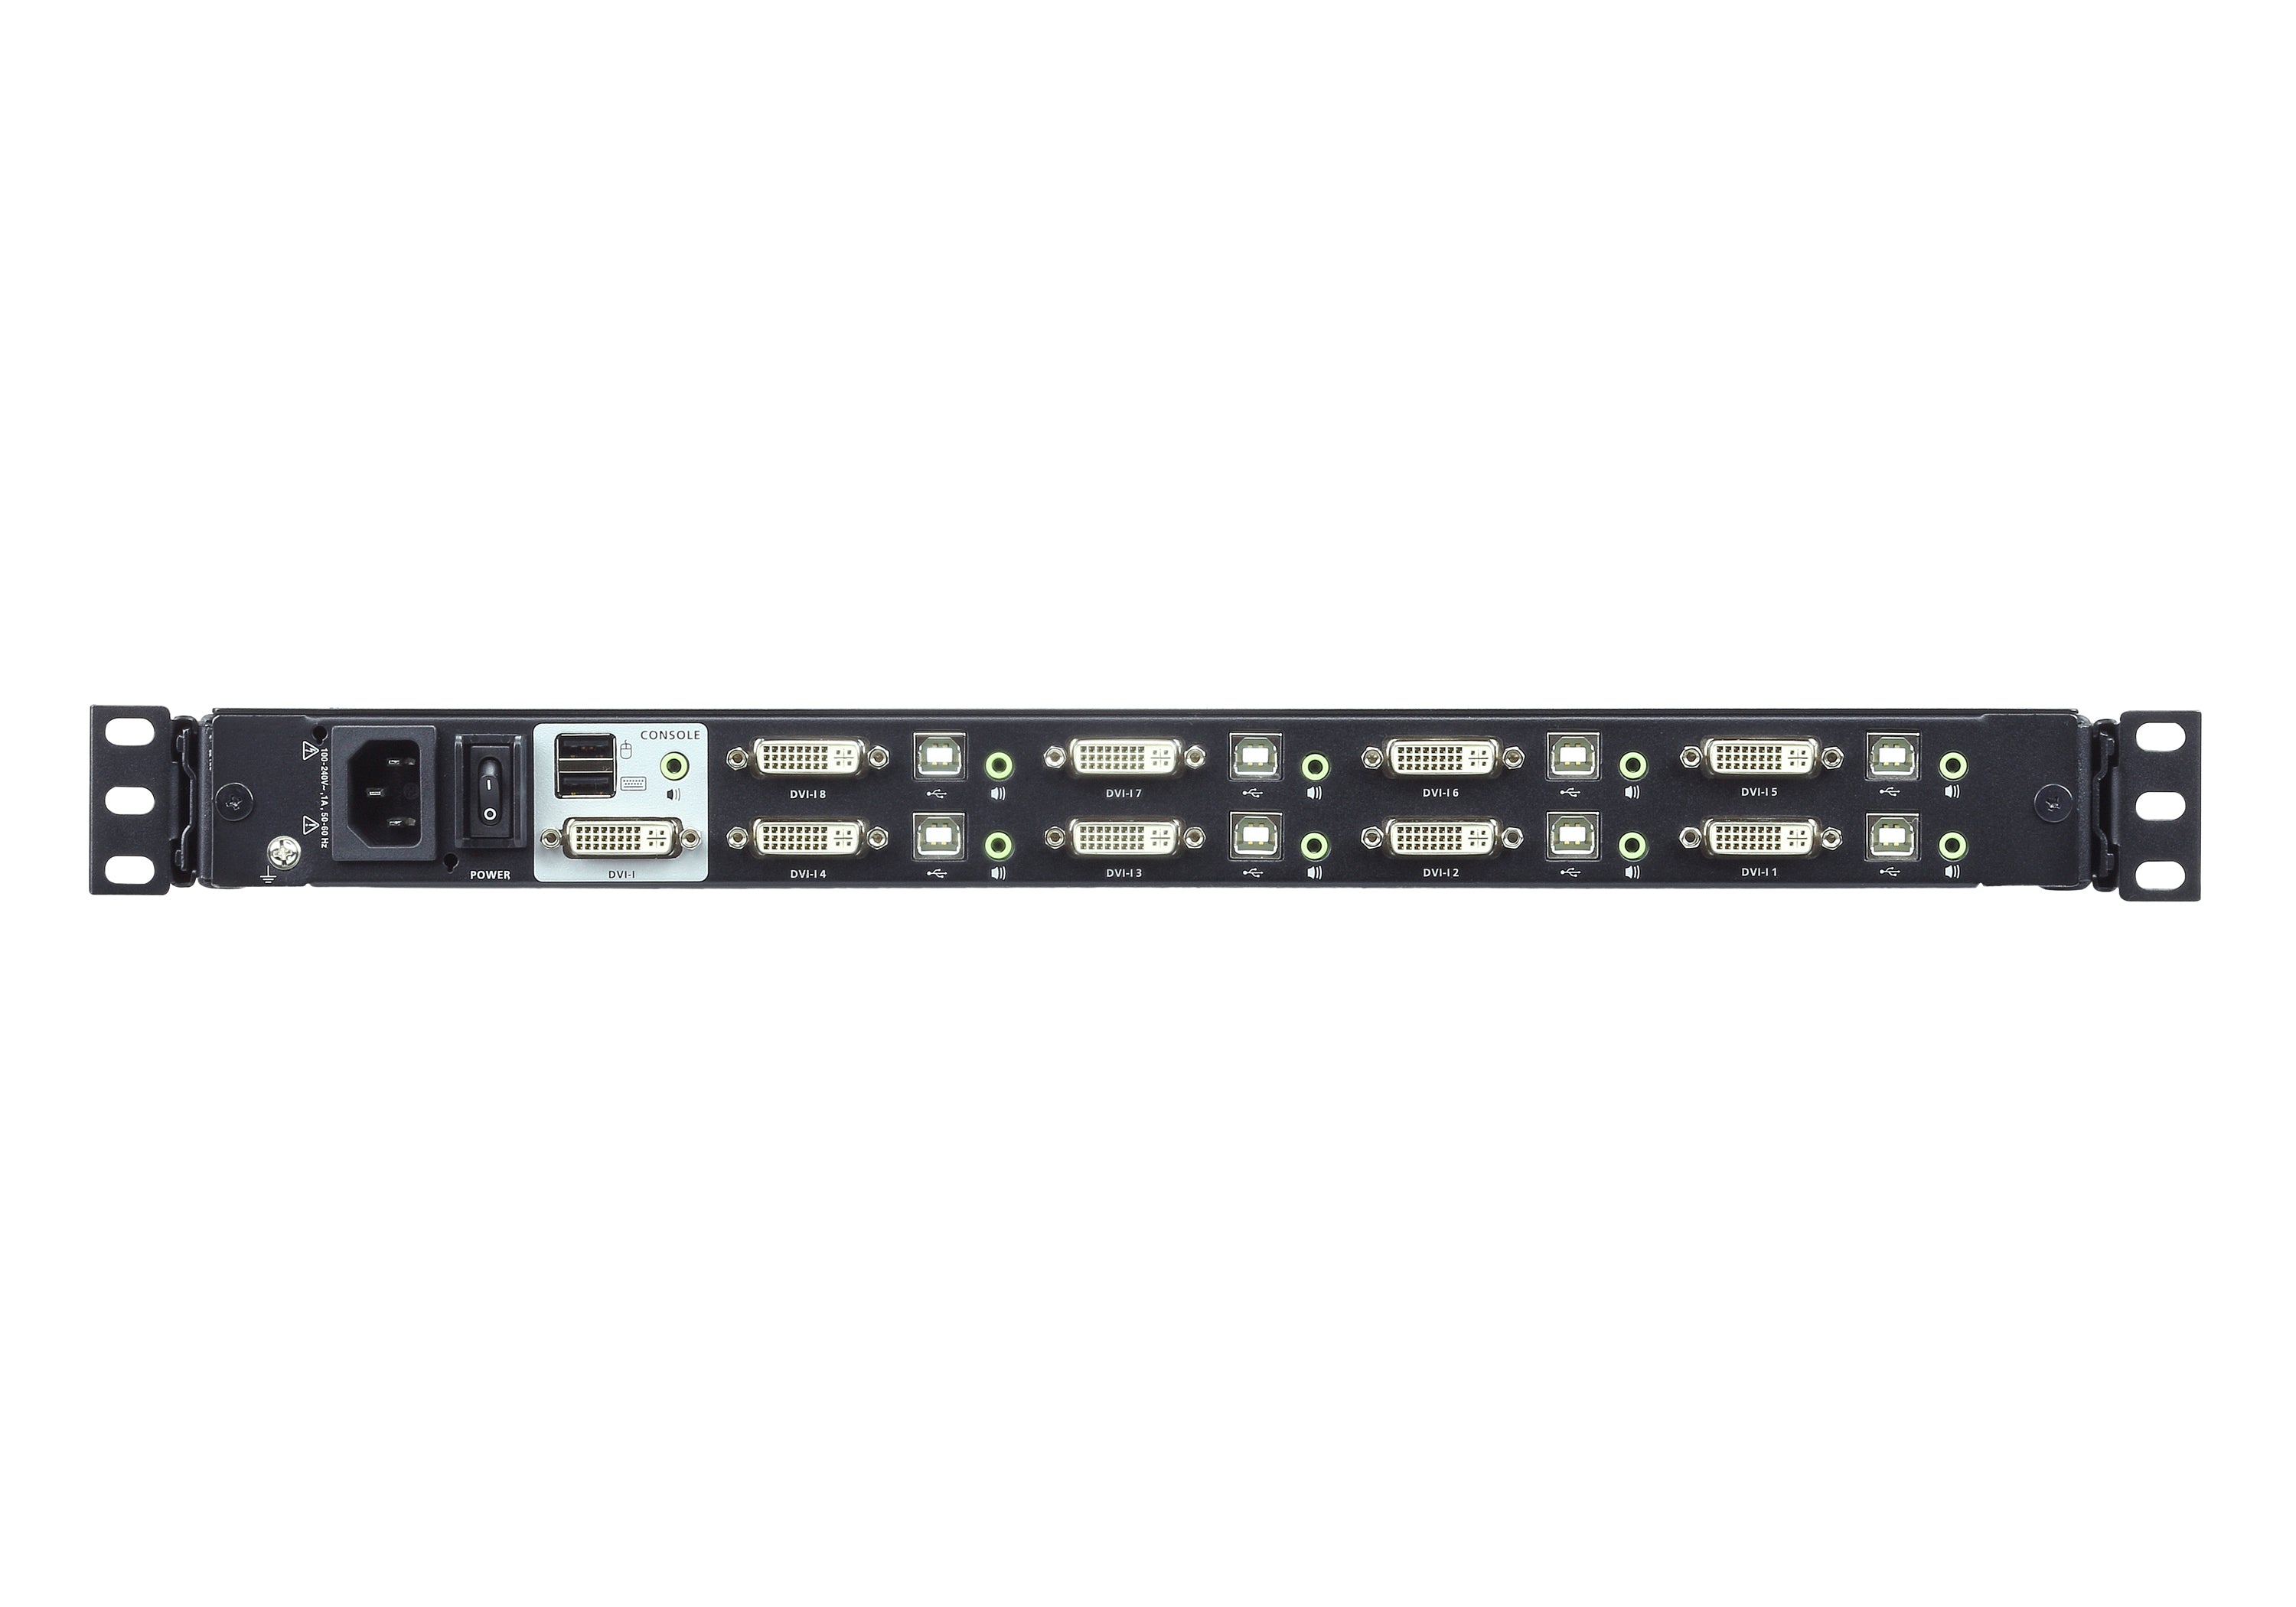 Aten 8-Port USB DVI Single Rail WideScreen LCD KVM Switch- CL6708MW (1 Year Manufacture Local Warranty In Singapore)